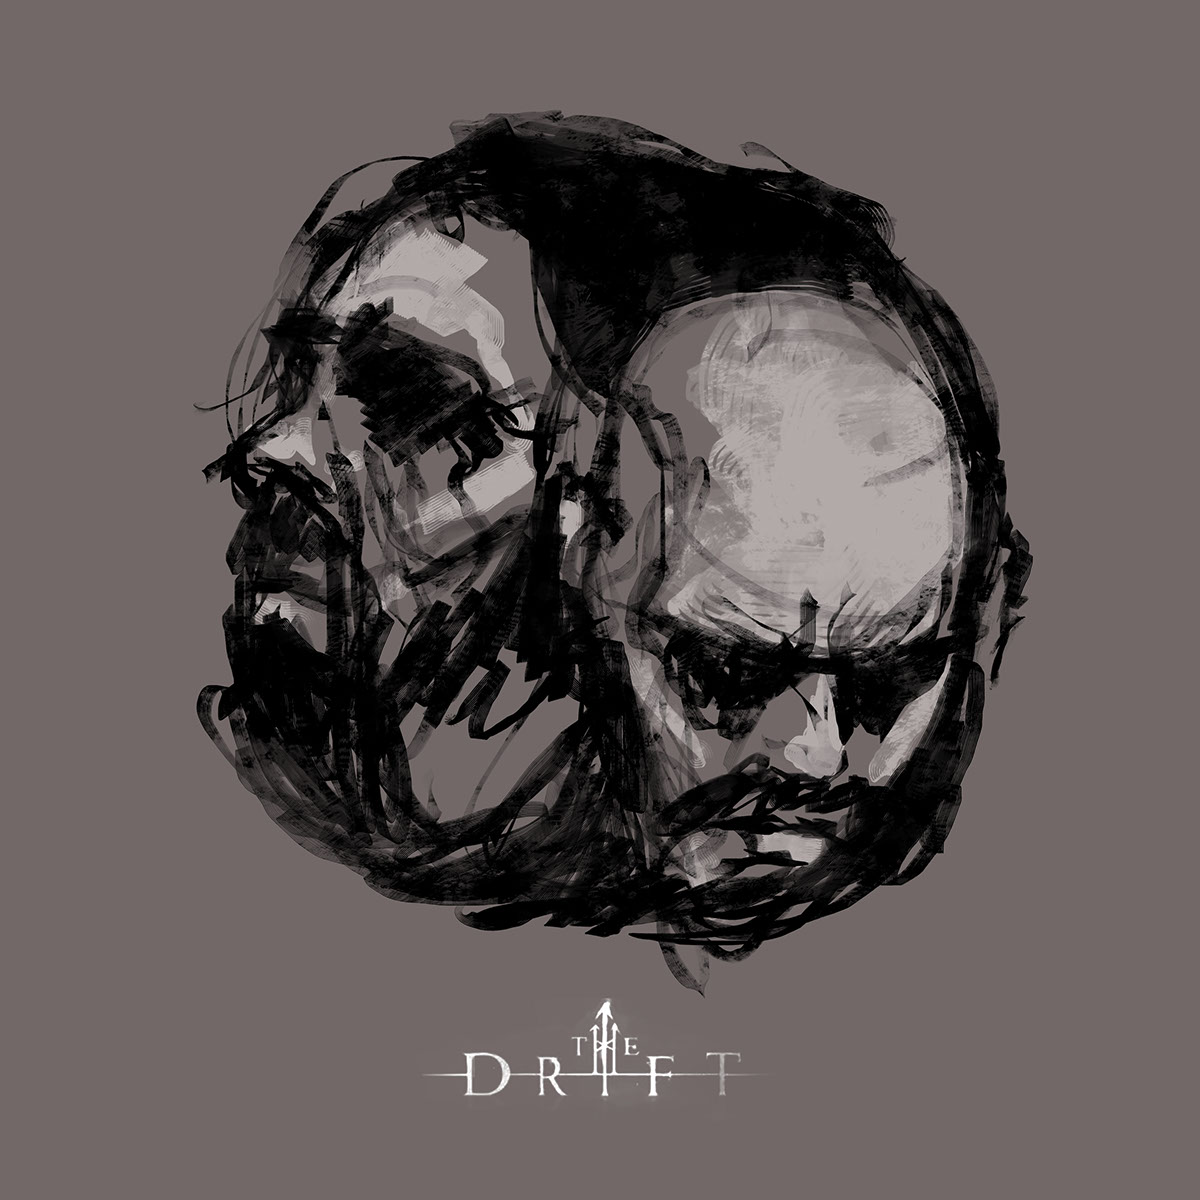 the drift dreams of Deluge lamb God metal cd Album artwork roadrunner Records father son